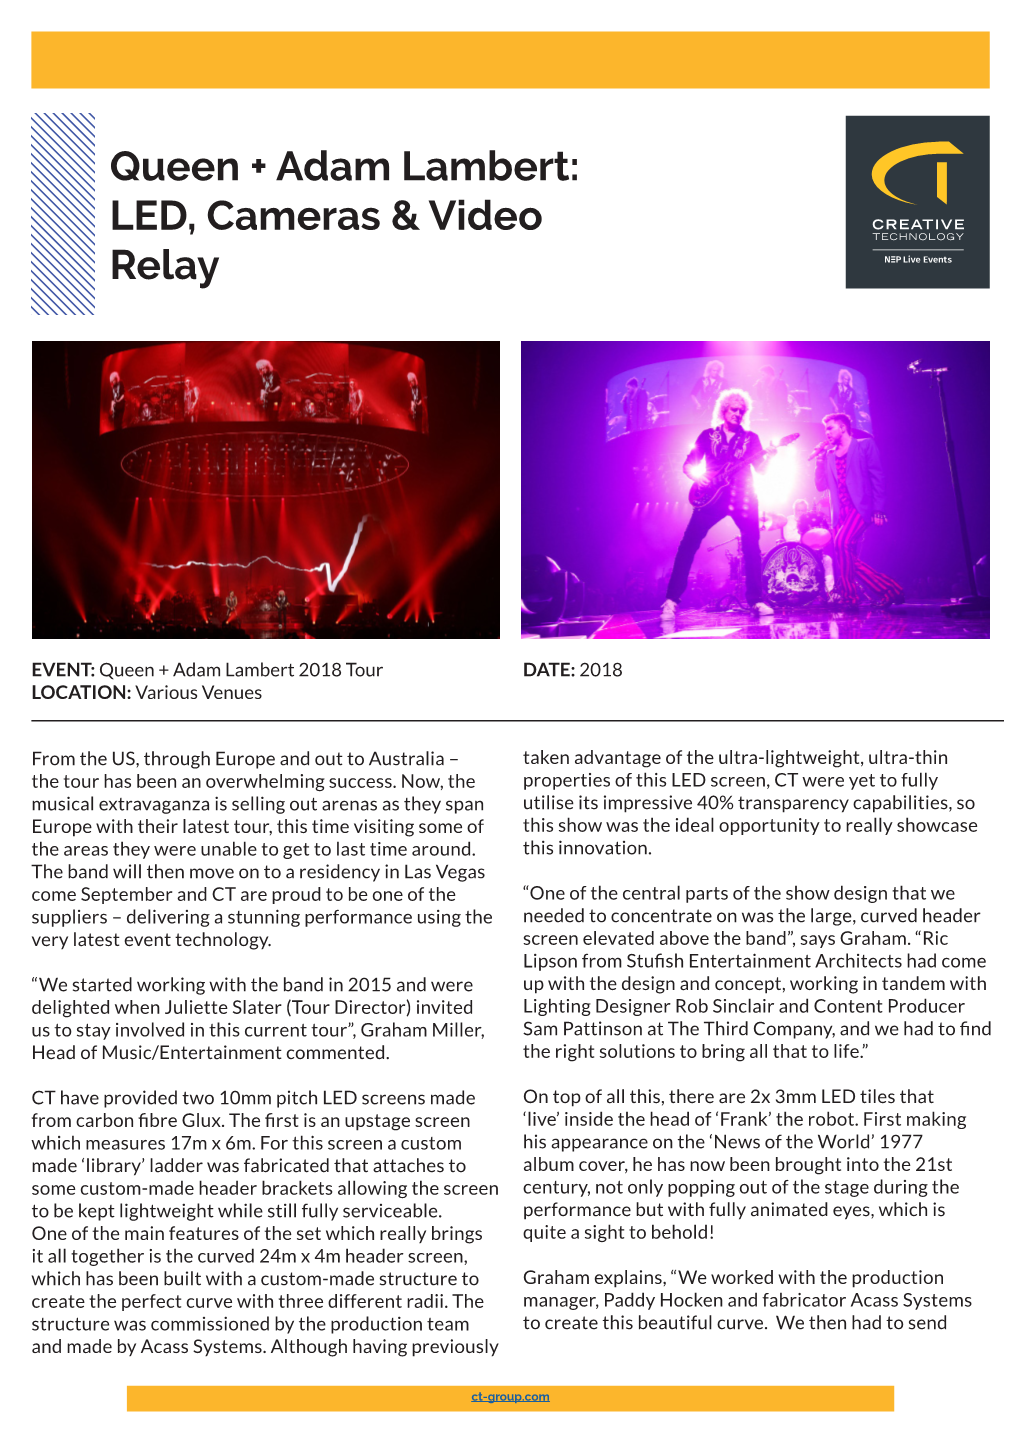 Queen + Adam Lambert: LED, Cameras & Video Relay